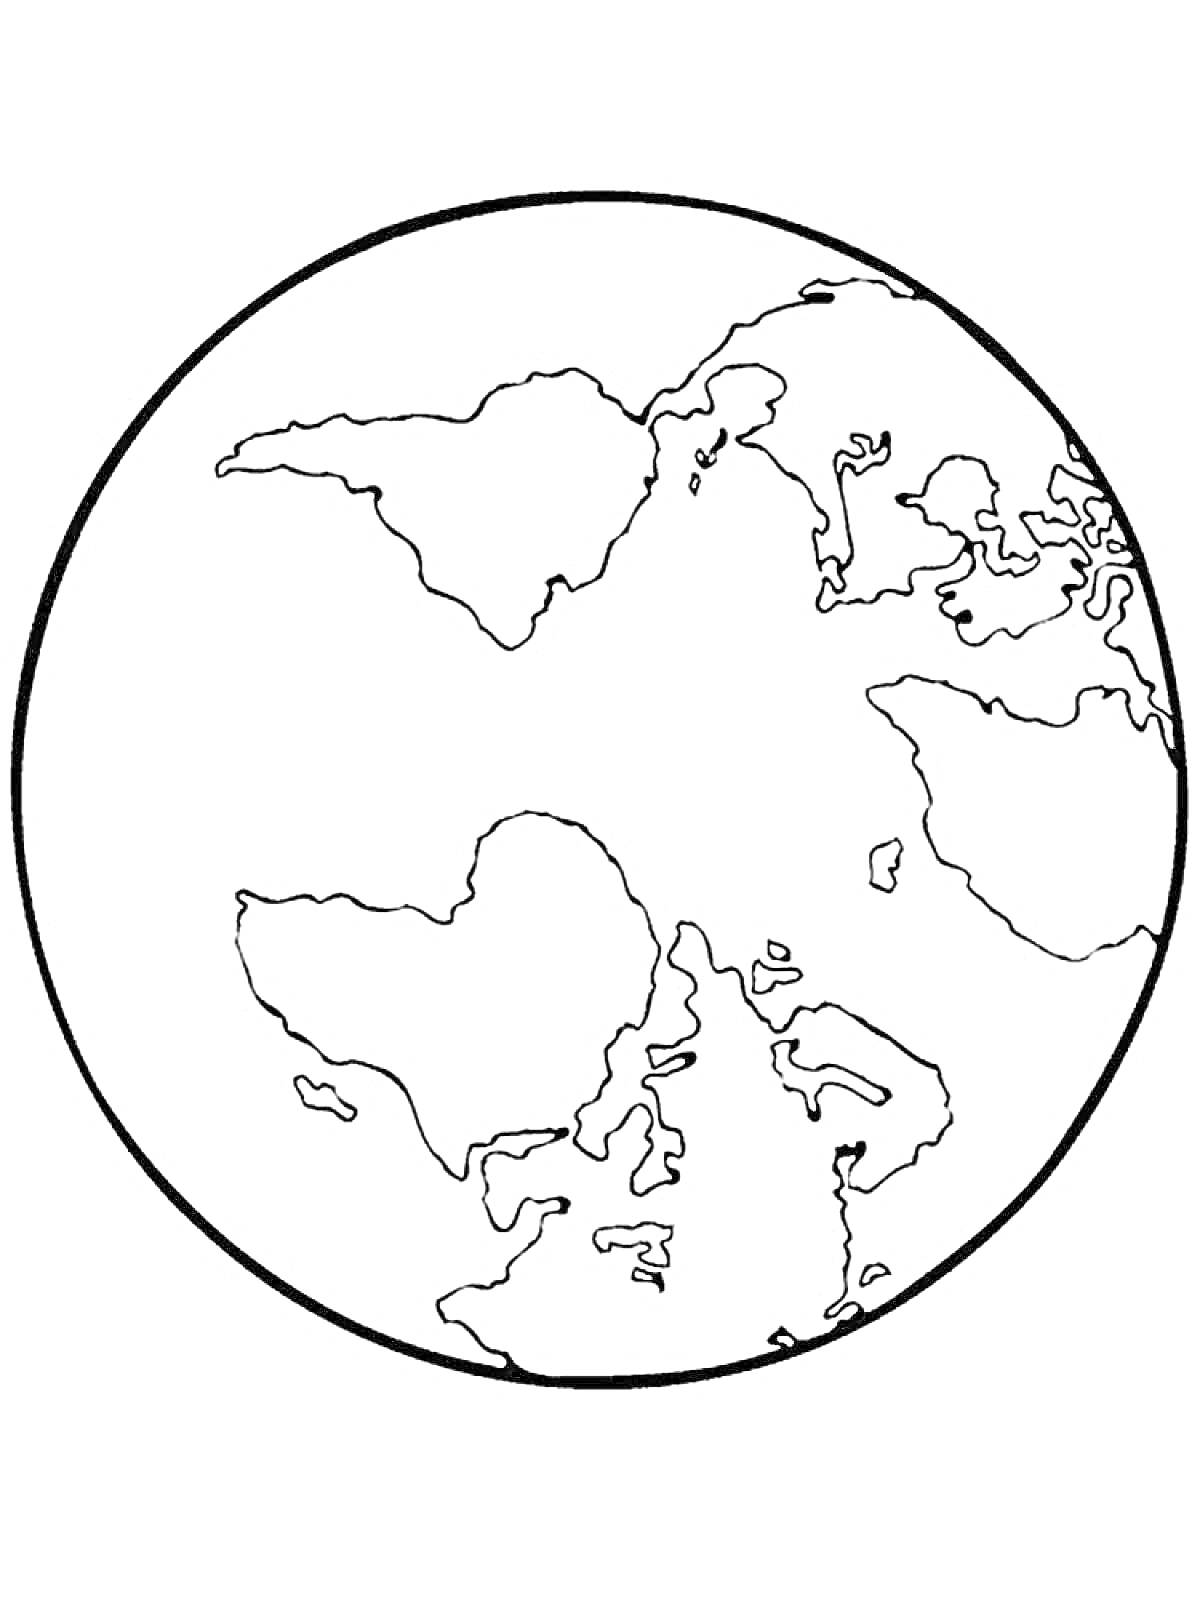 Изображение планеты Земля с континентами Северная Америка, Южная Америка, Африка, Европа и Азия